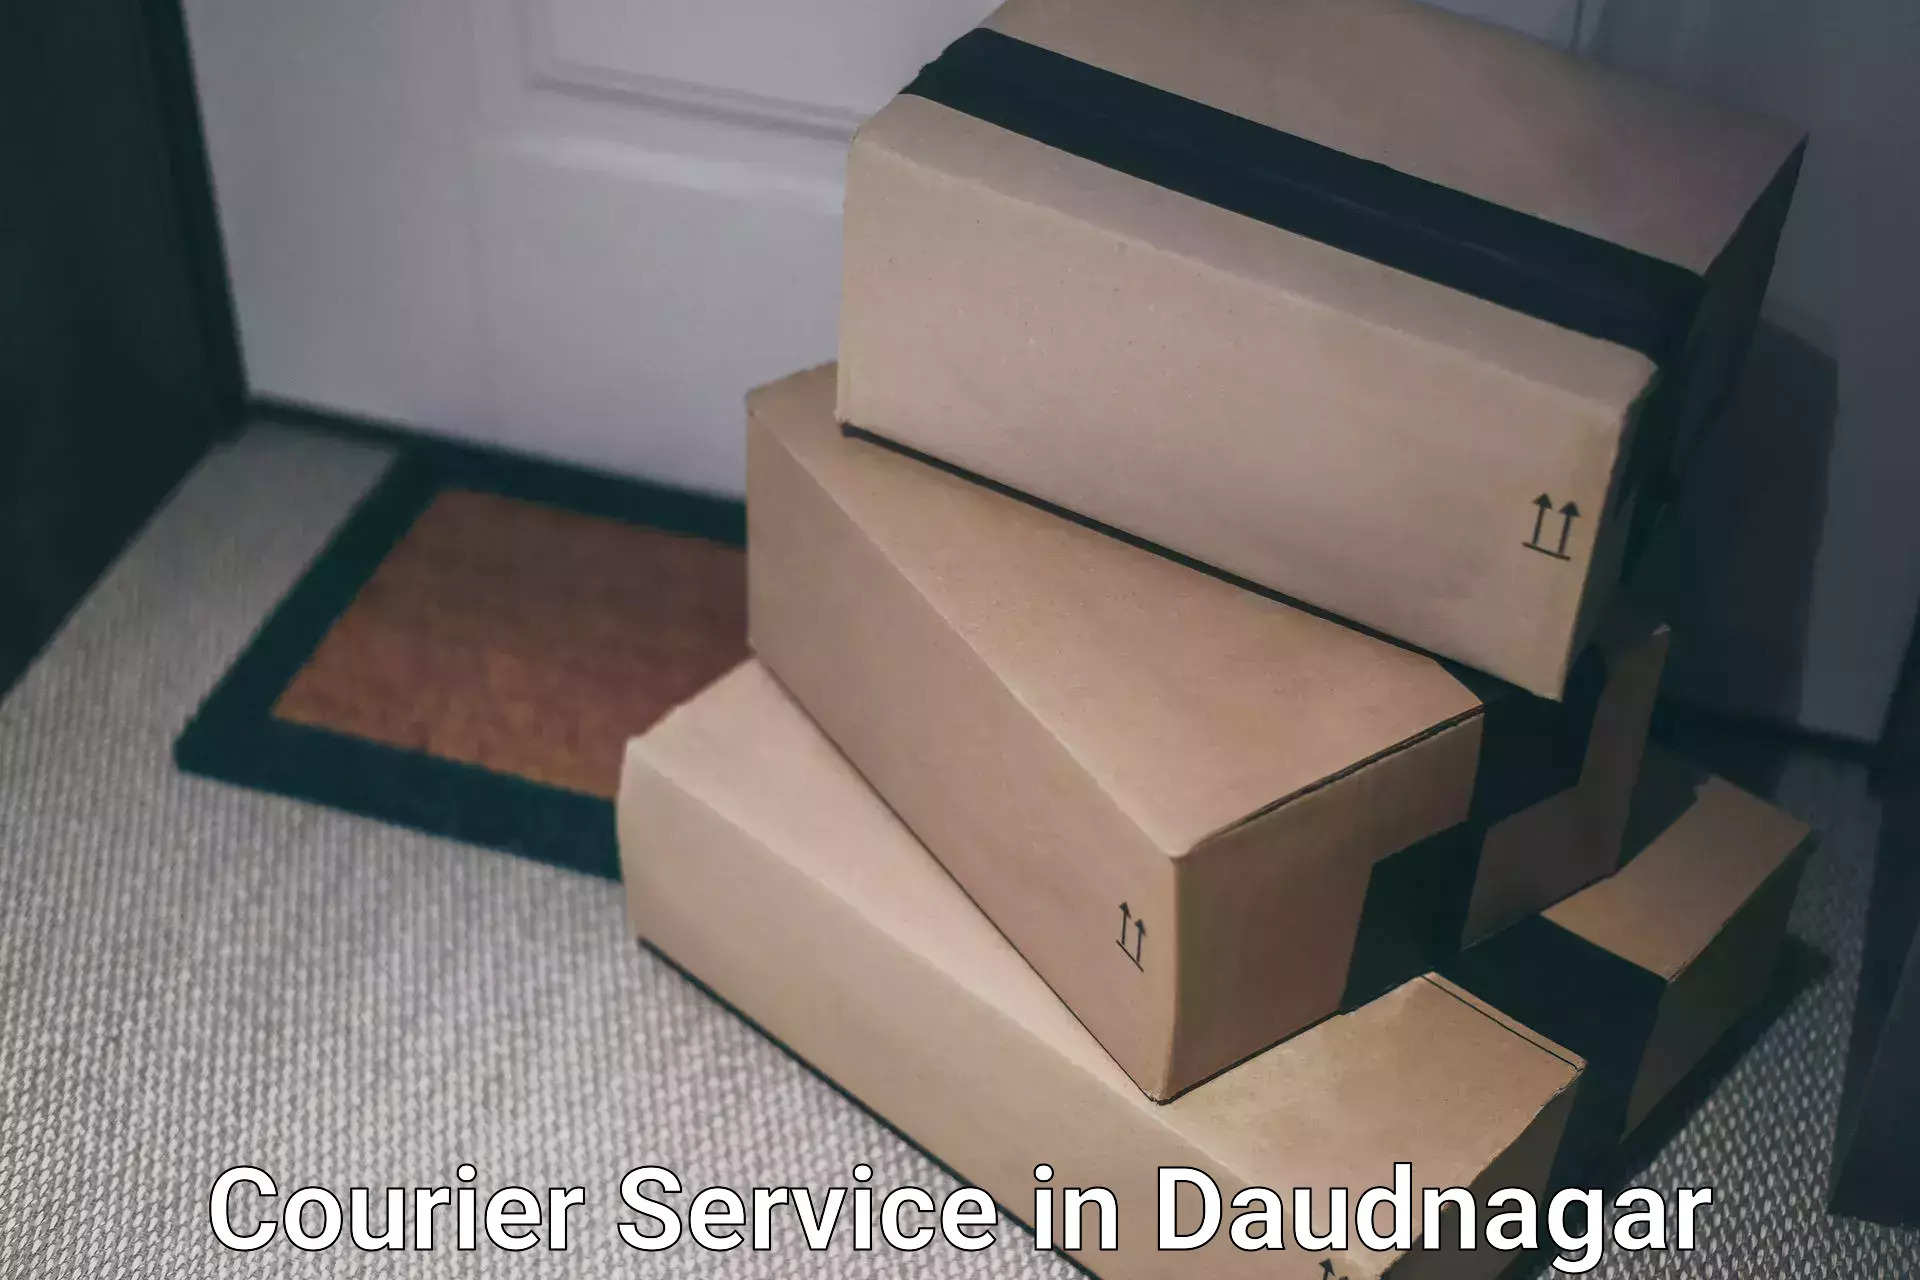 Flexible parcel services in Daudnagar